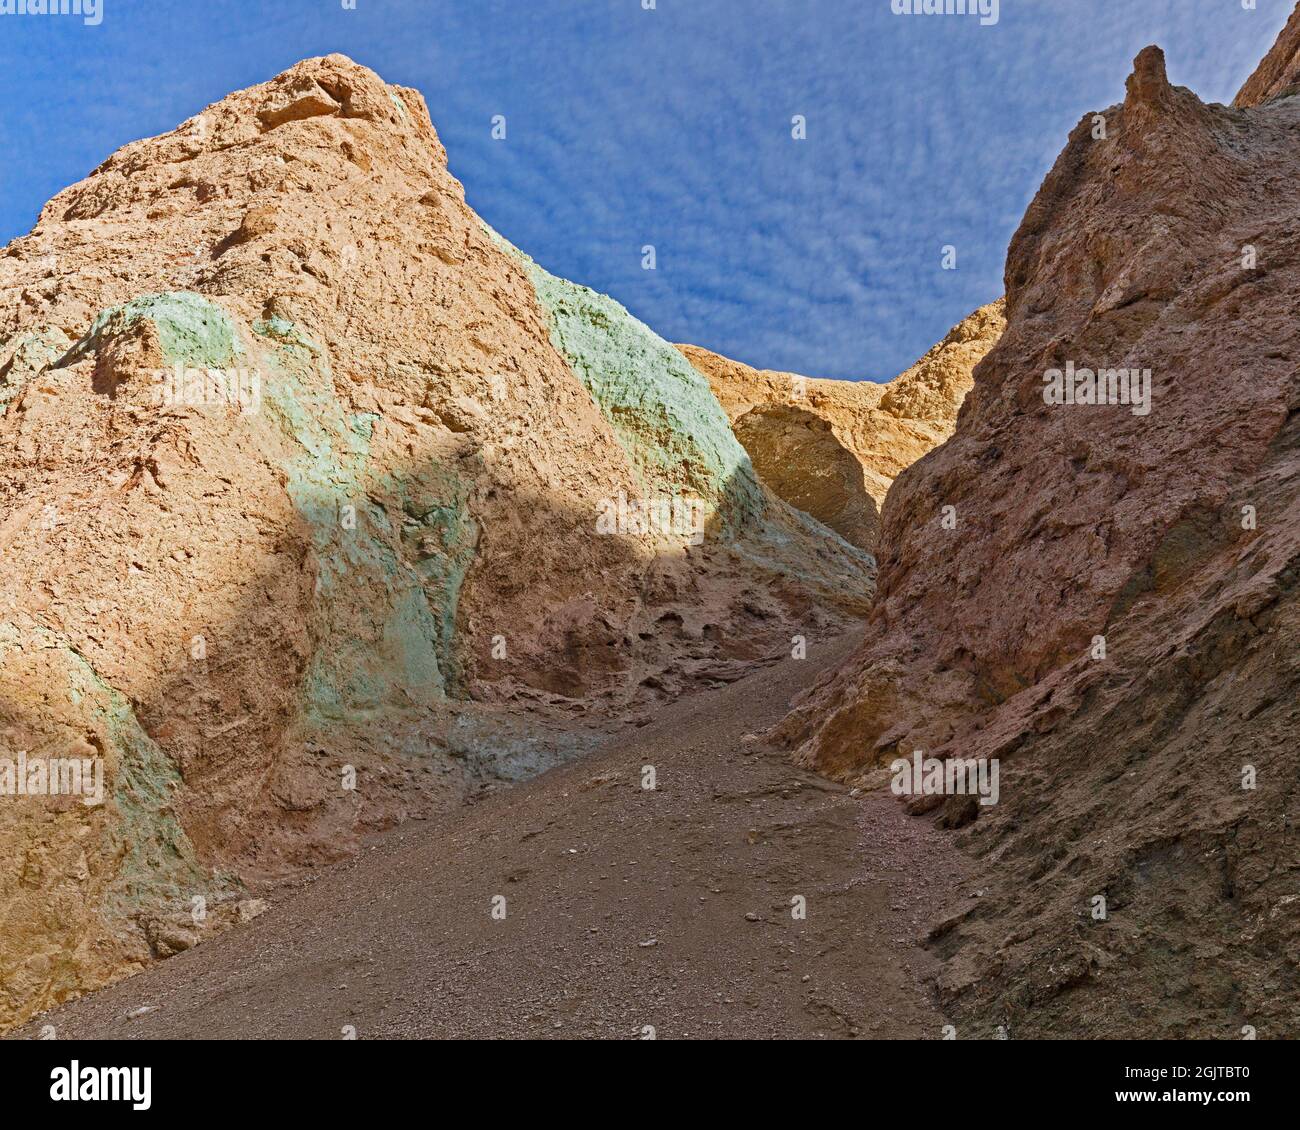 Der Desolation Canyon im Death Valley ist alles andere als desolat. Stockfoto